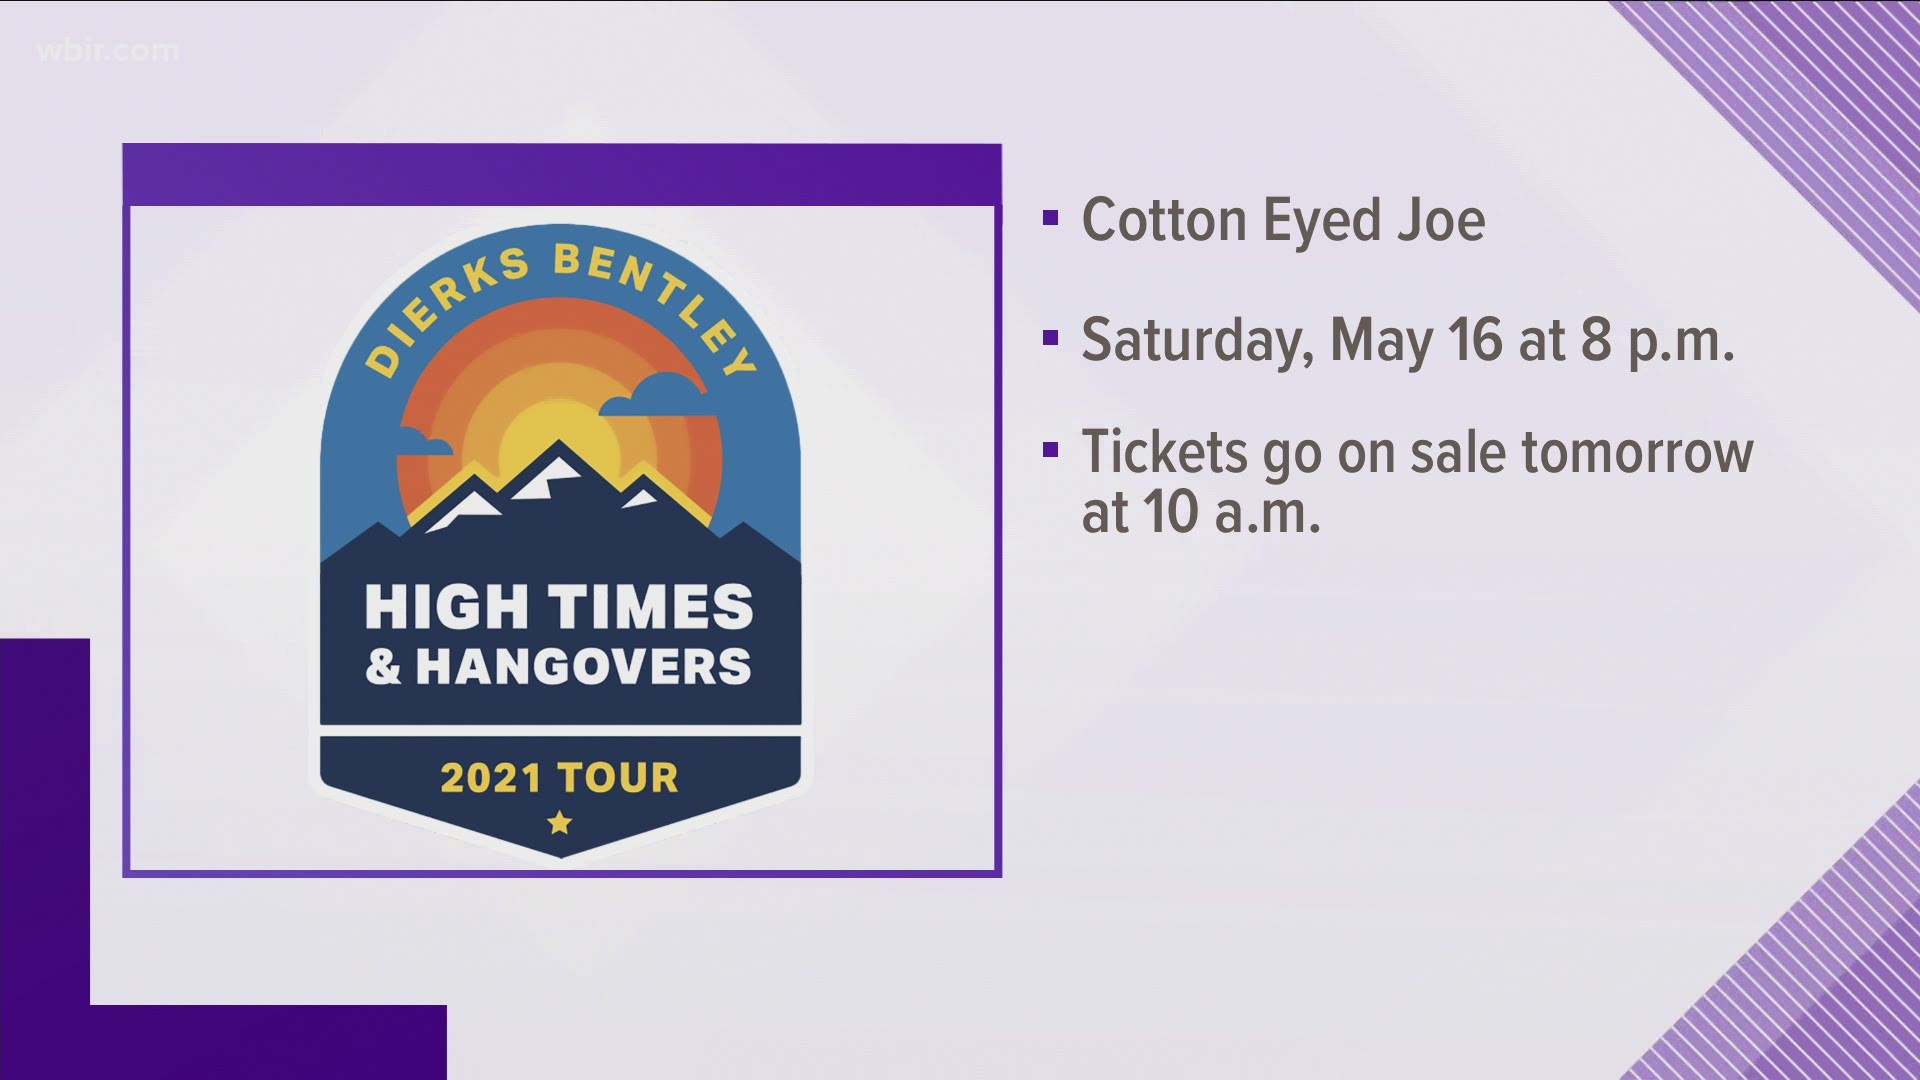 Dierks Bentley to play Cotton Eye Joe on May 16.